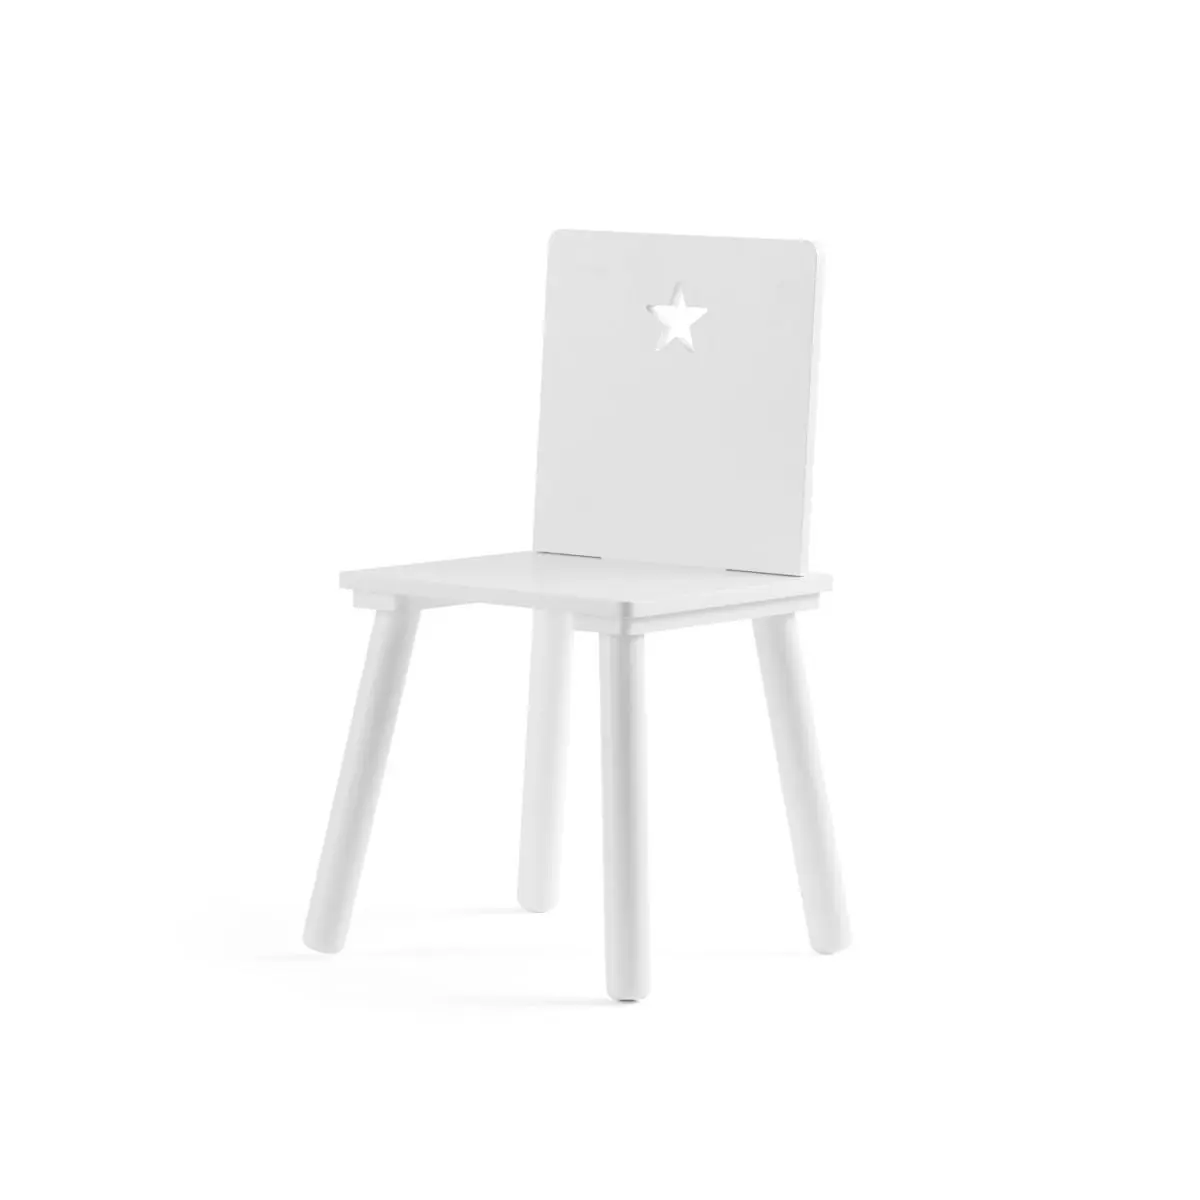 Stuhl Star weiß Sitzhöhe 30 cm